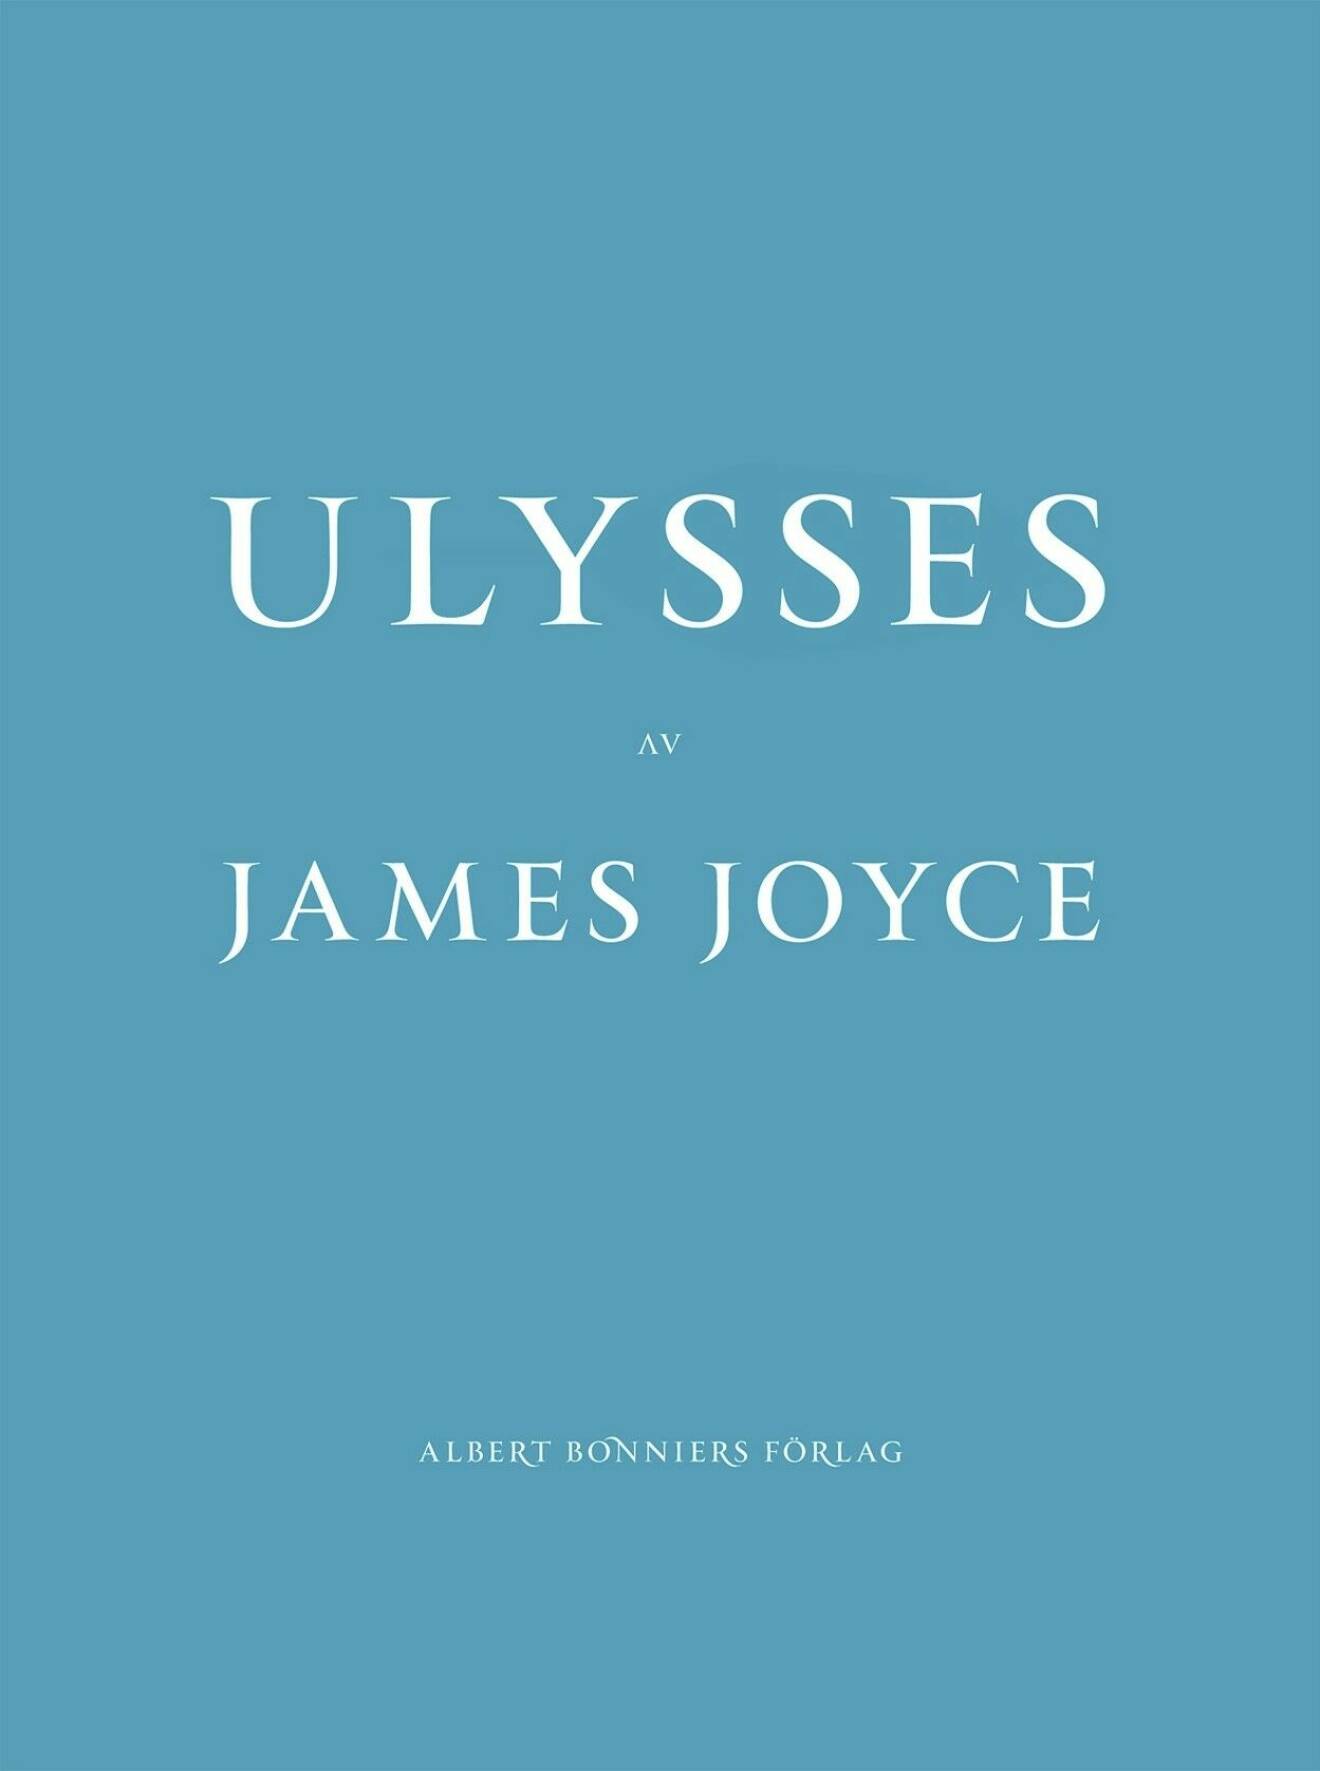 Ulysses av James Joyce.